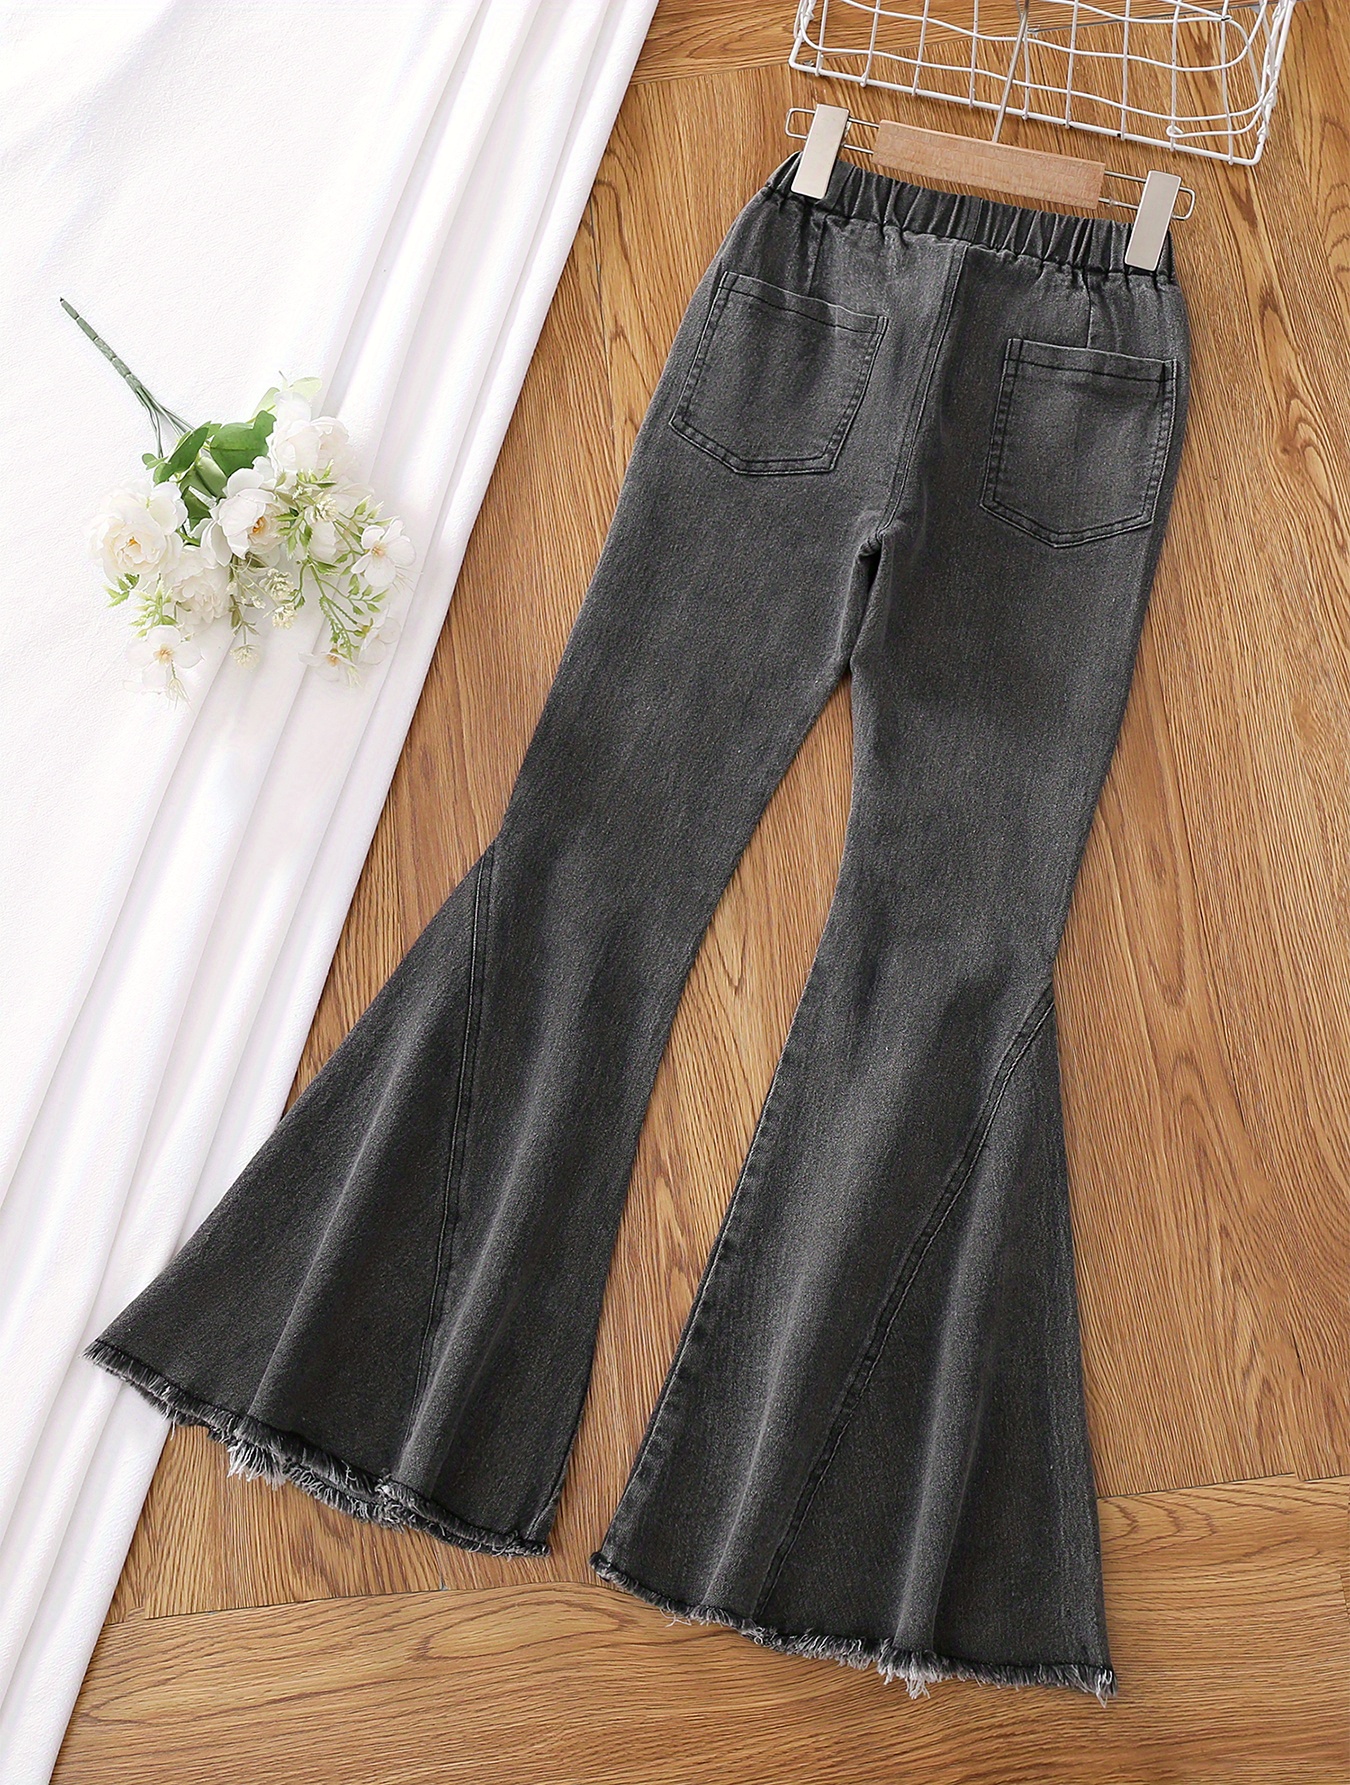 Flared Jeans Vintage High Waist Full Length Wide Leg Pants